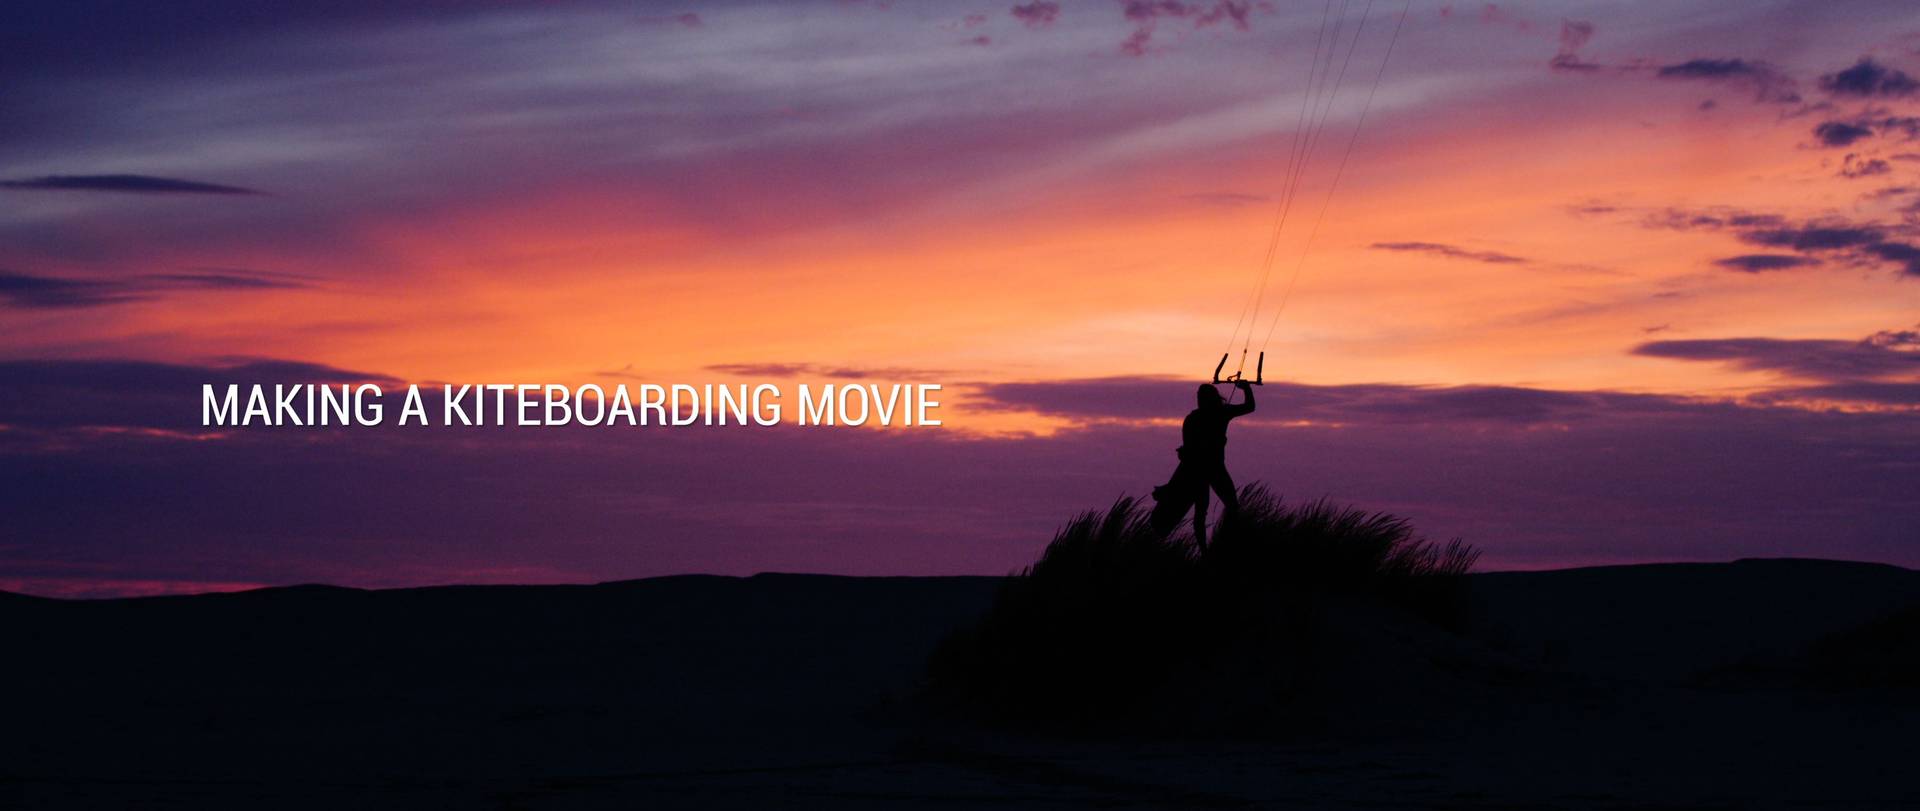 Making a kiteboarding movie